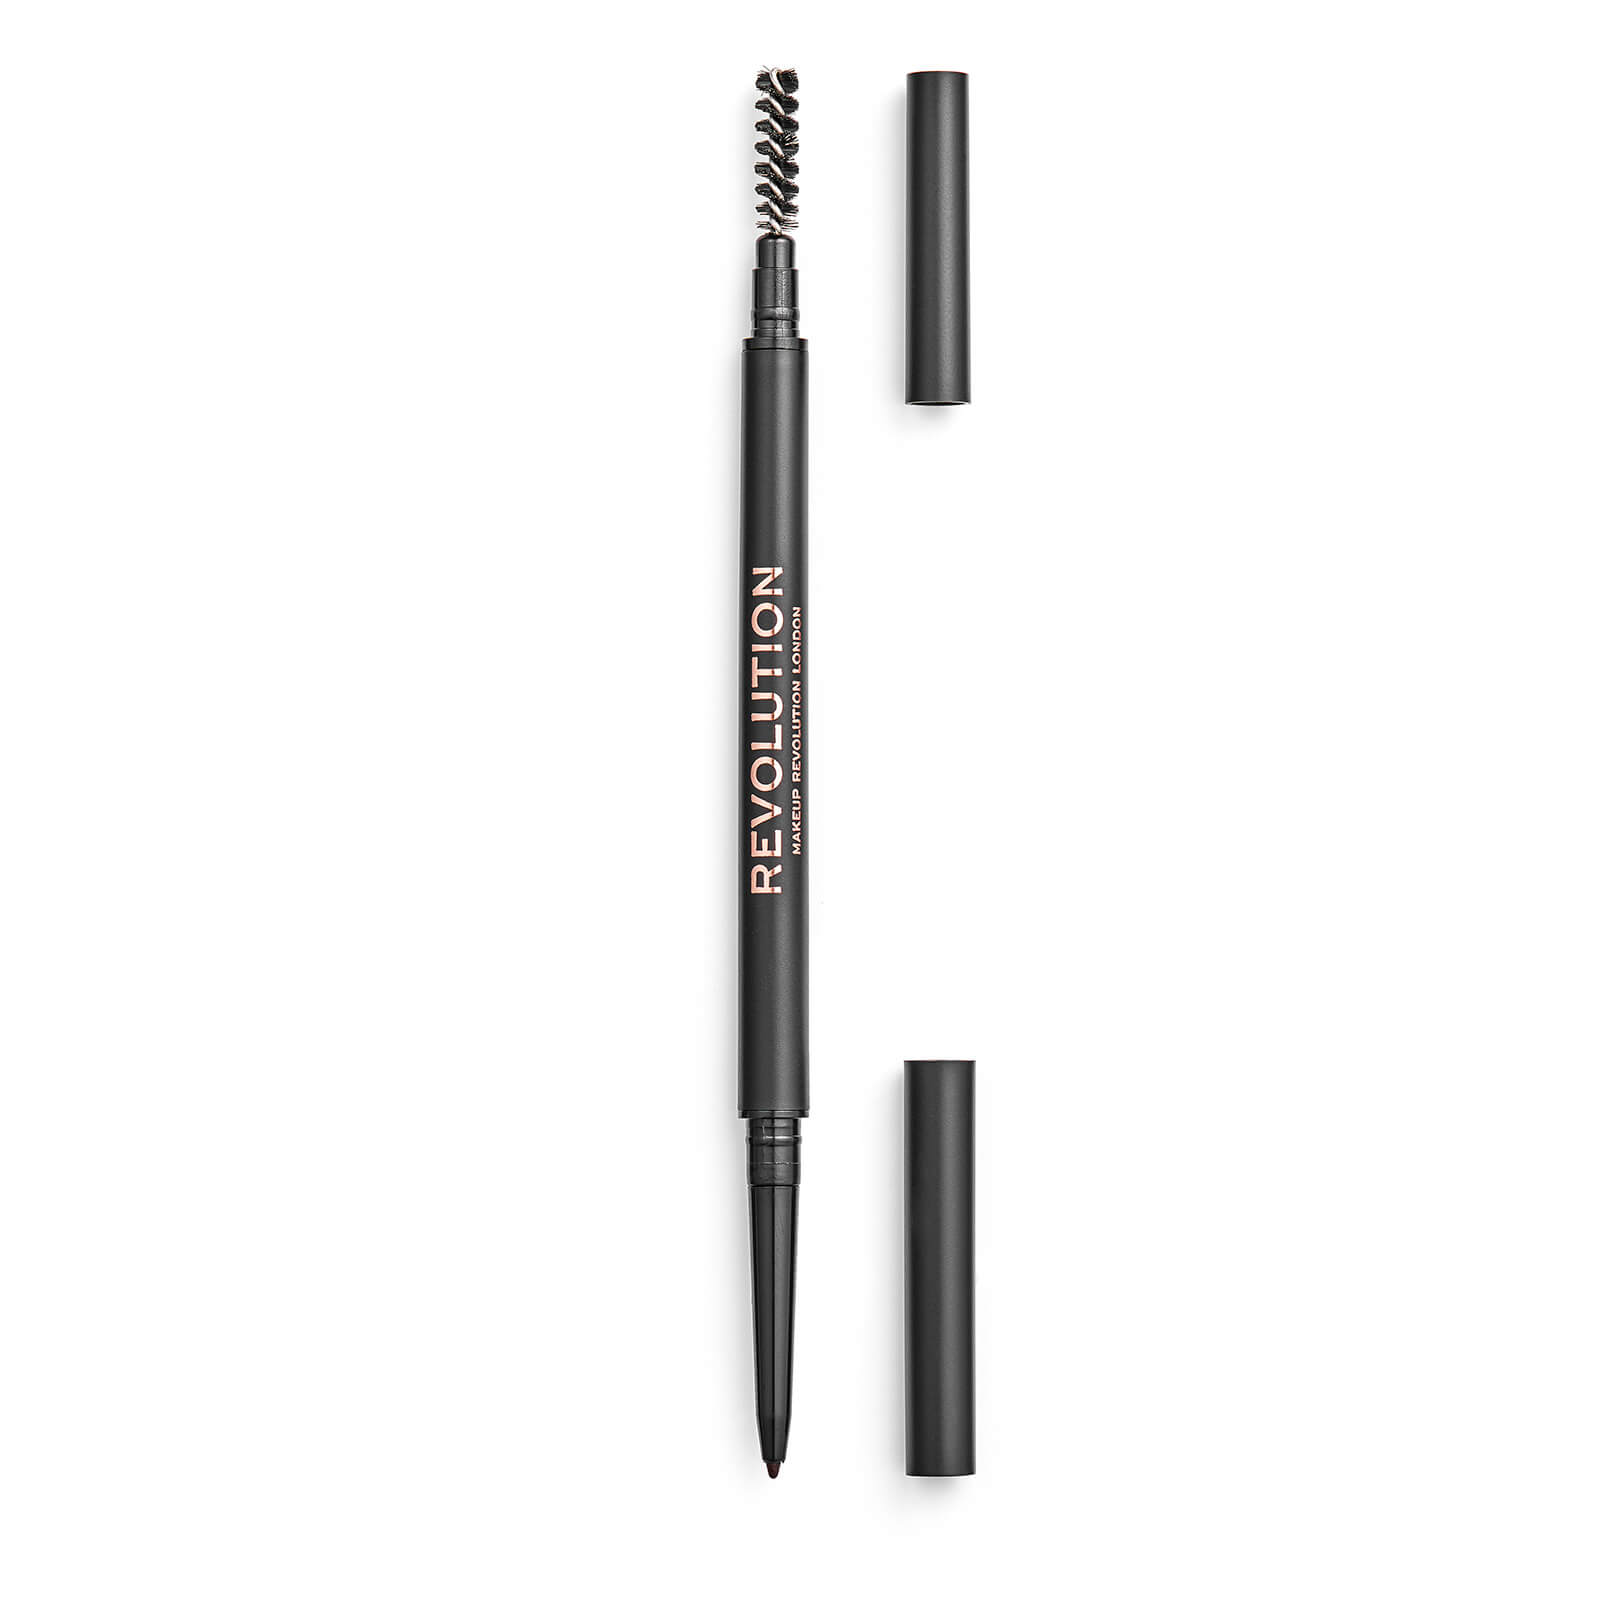 Makeup Revolution Precise Brow Pencil 0.05g (Various Shades) - Dark Brown